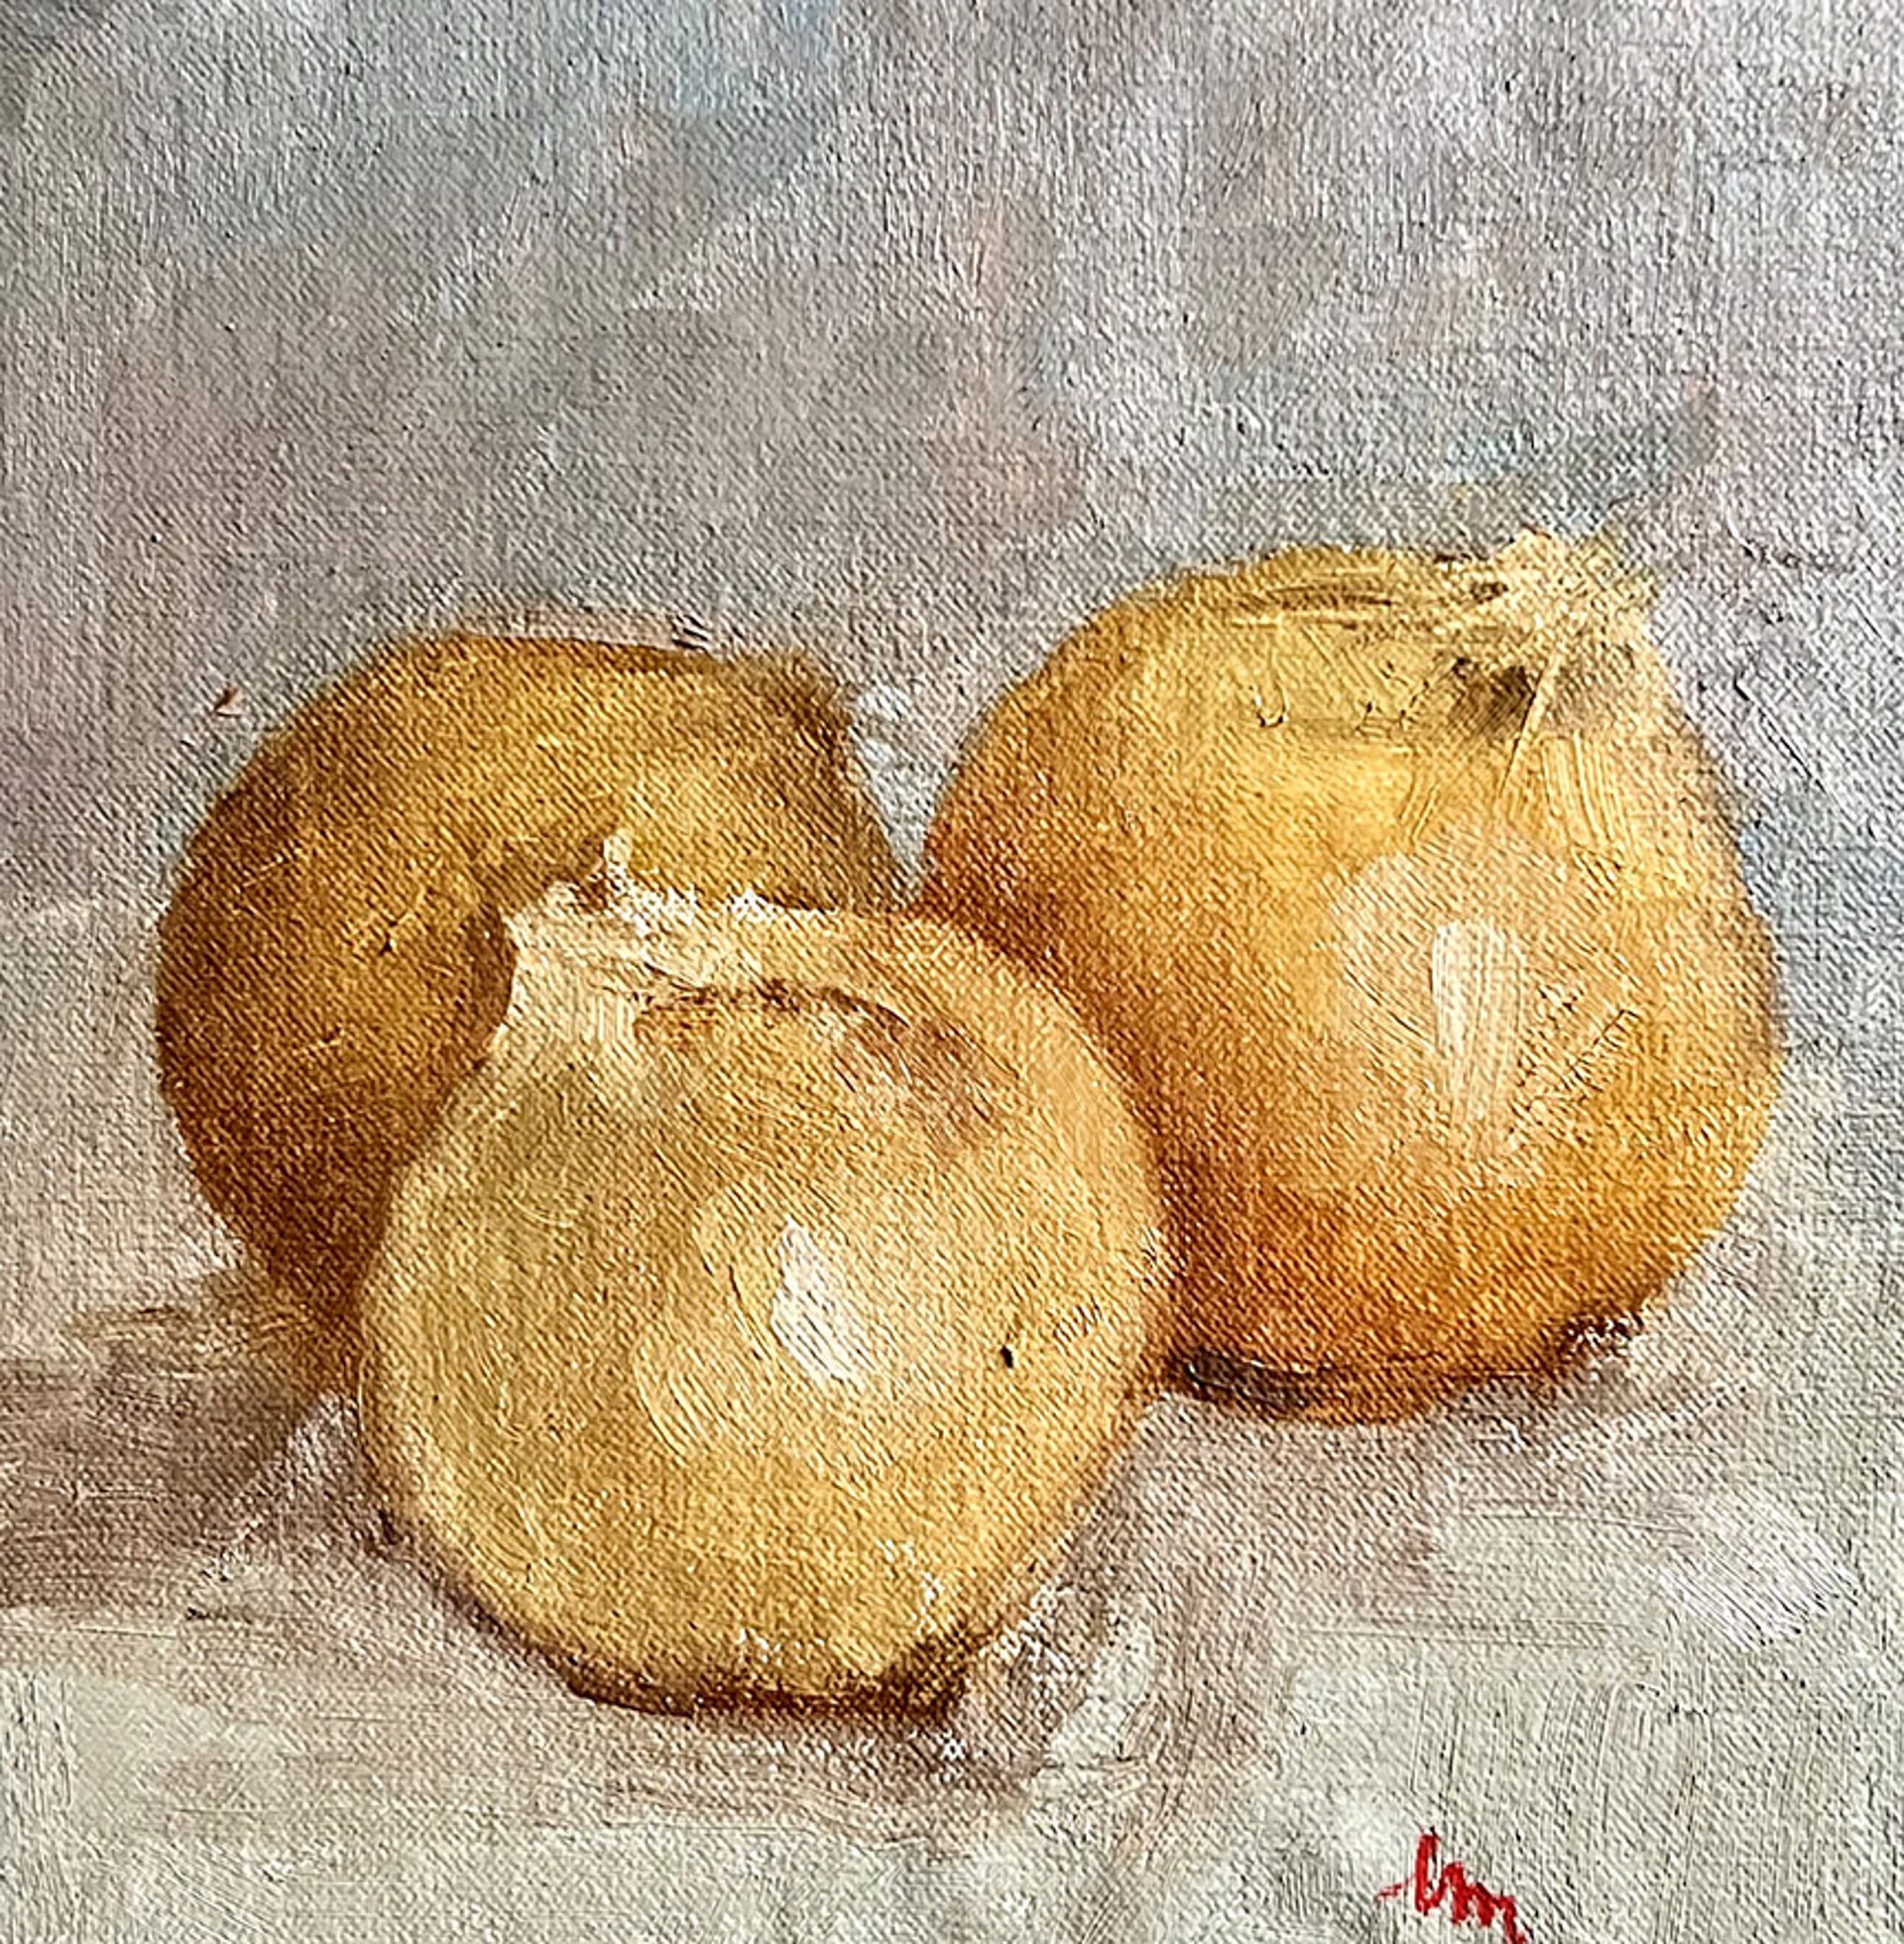 Onions by Laura Murphey